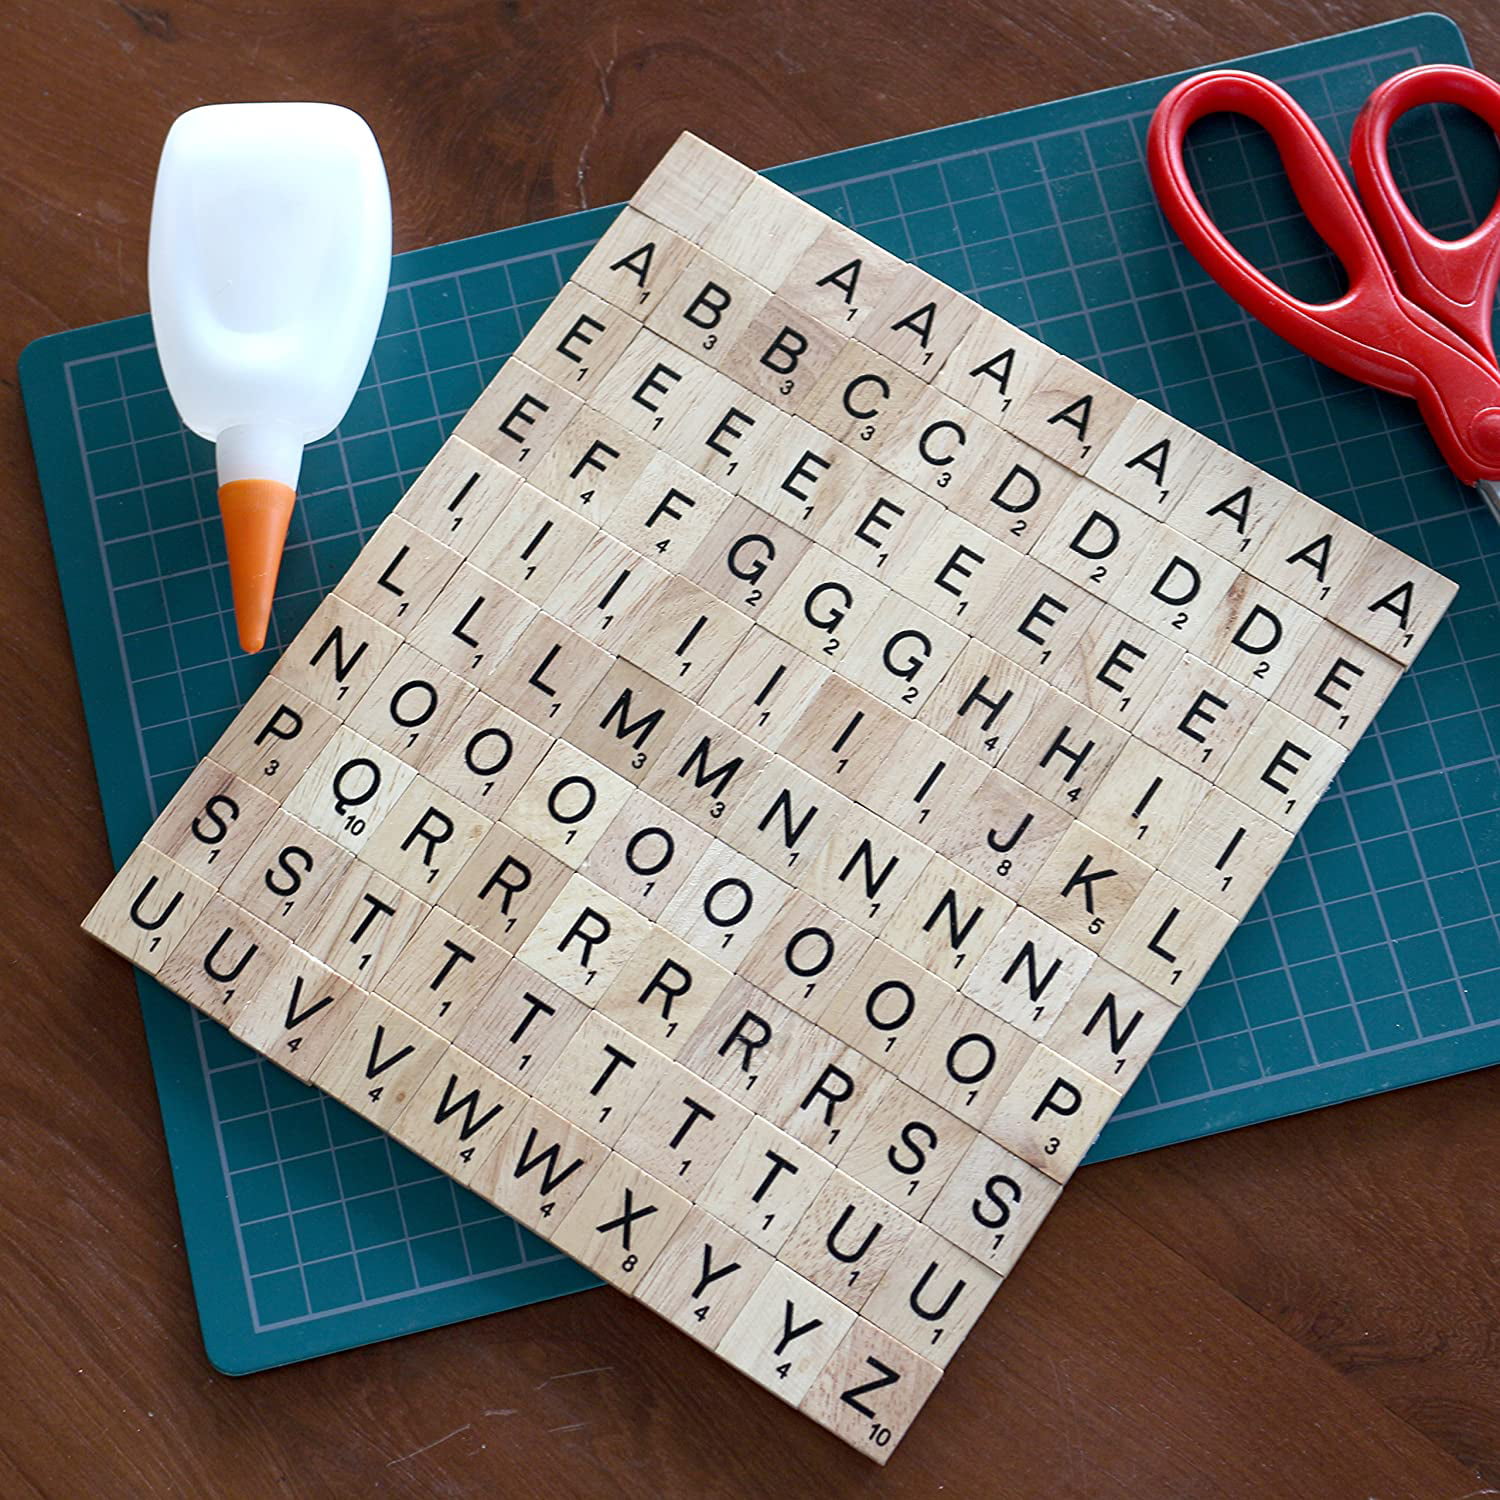 100 Scrabble Letter Tiles Complete Set Wooden Game Pieces Letters USA Seller 